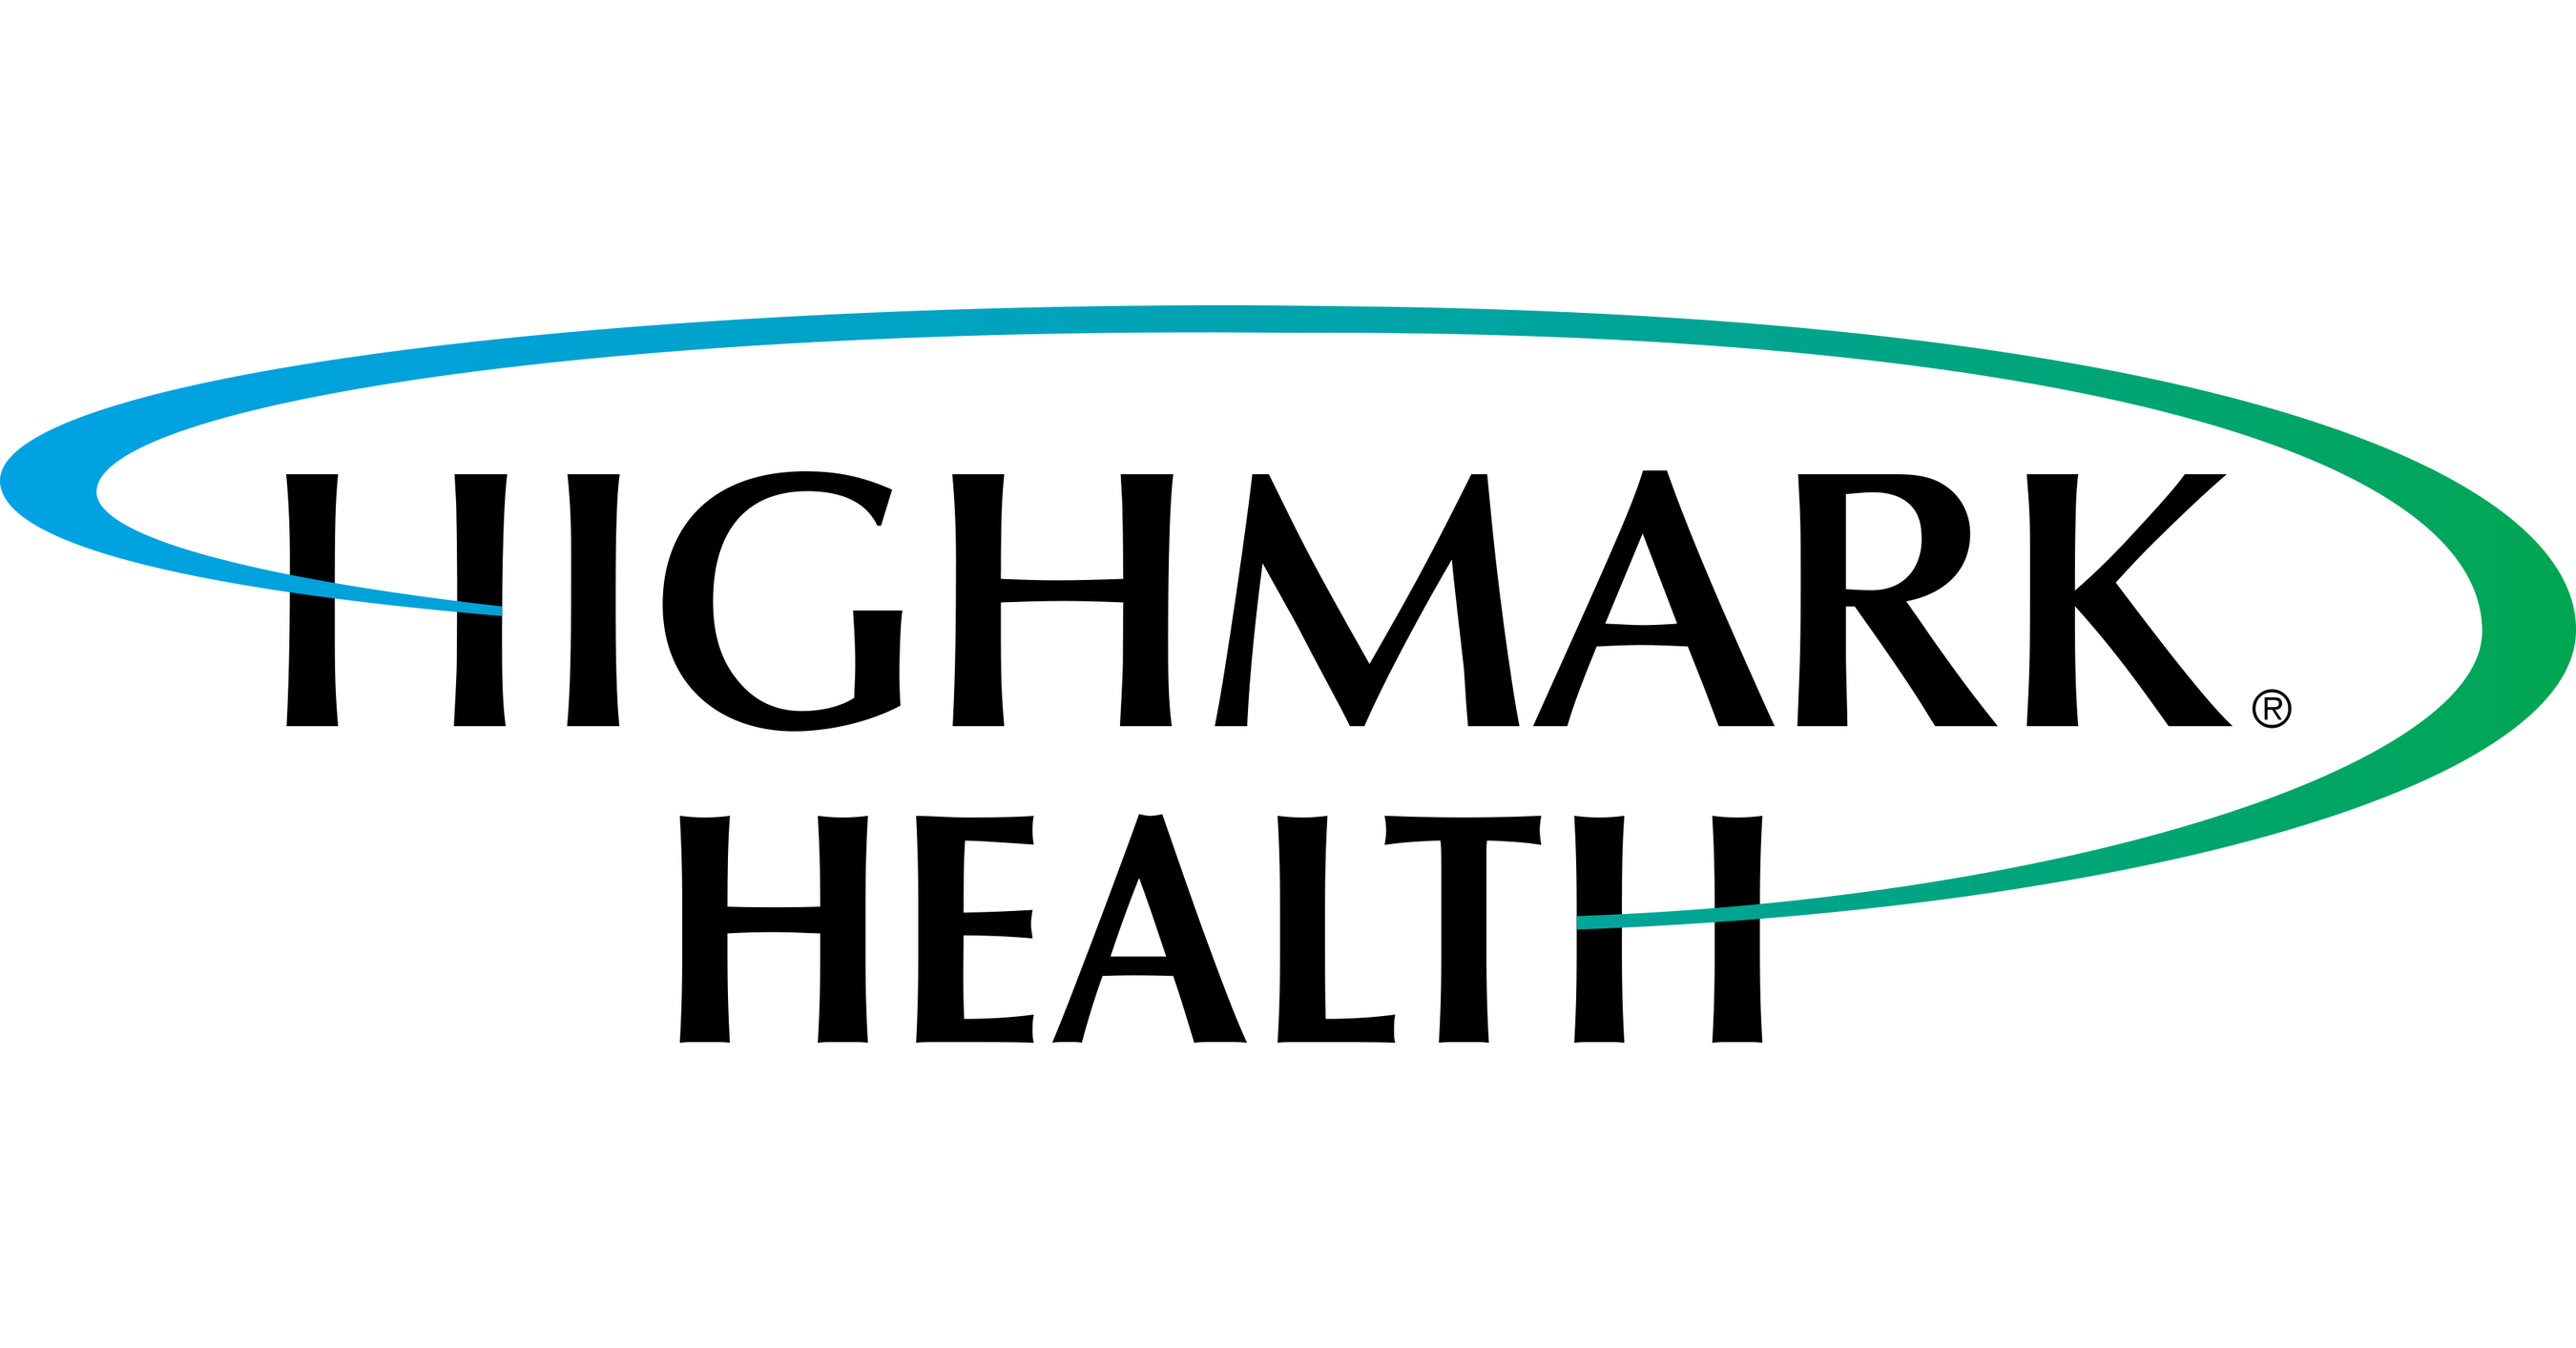 Highmark health audited financial statements northwest ga humane society